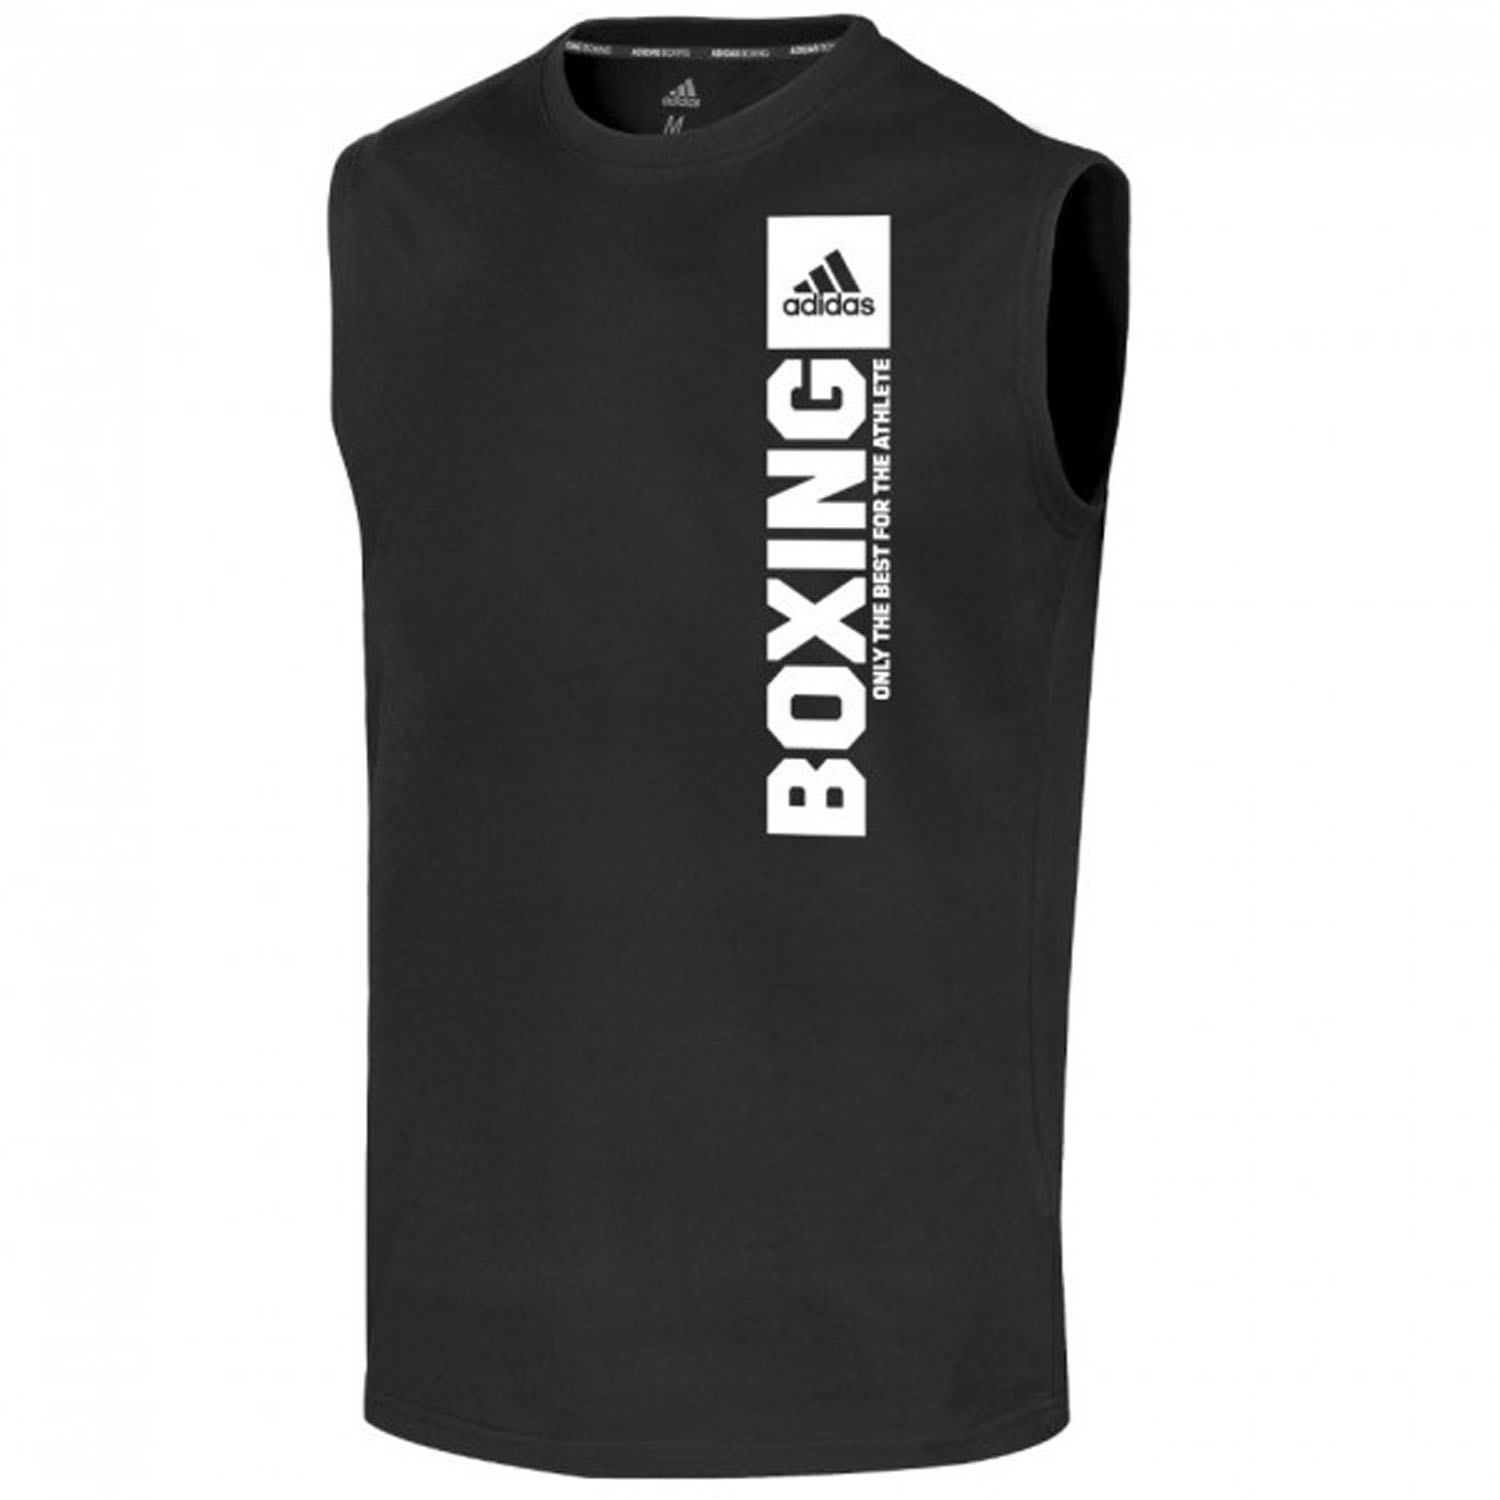 adidas Sleeveless T-Shirt, Community Vertical Boxing, schwarz